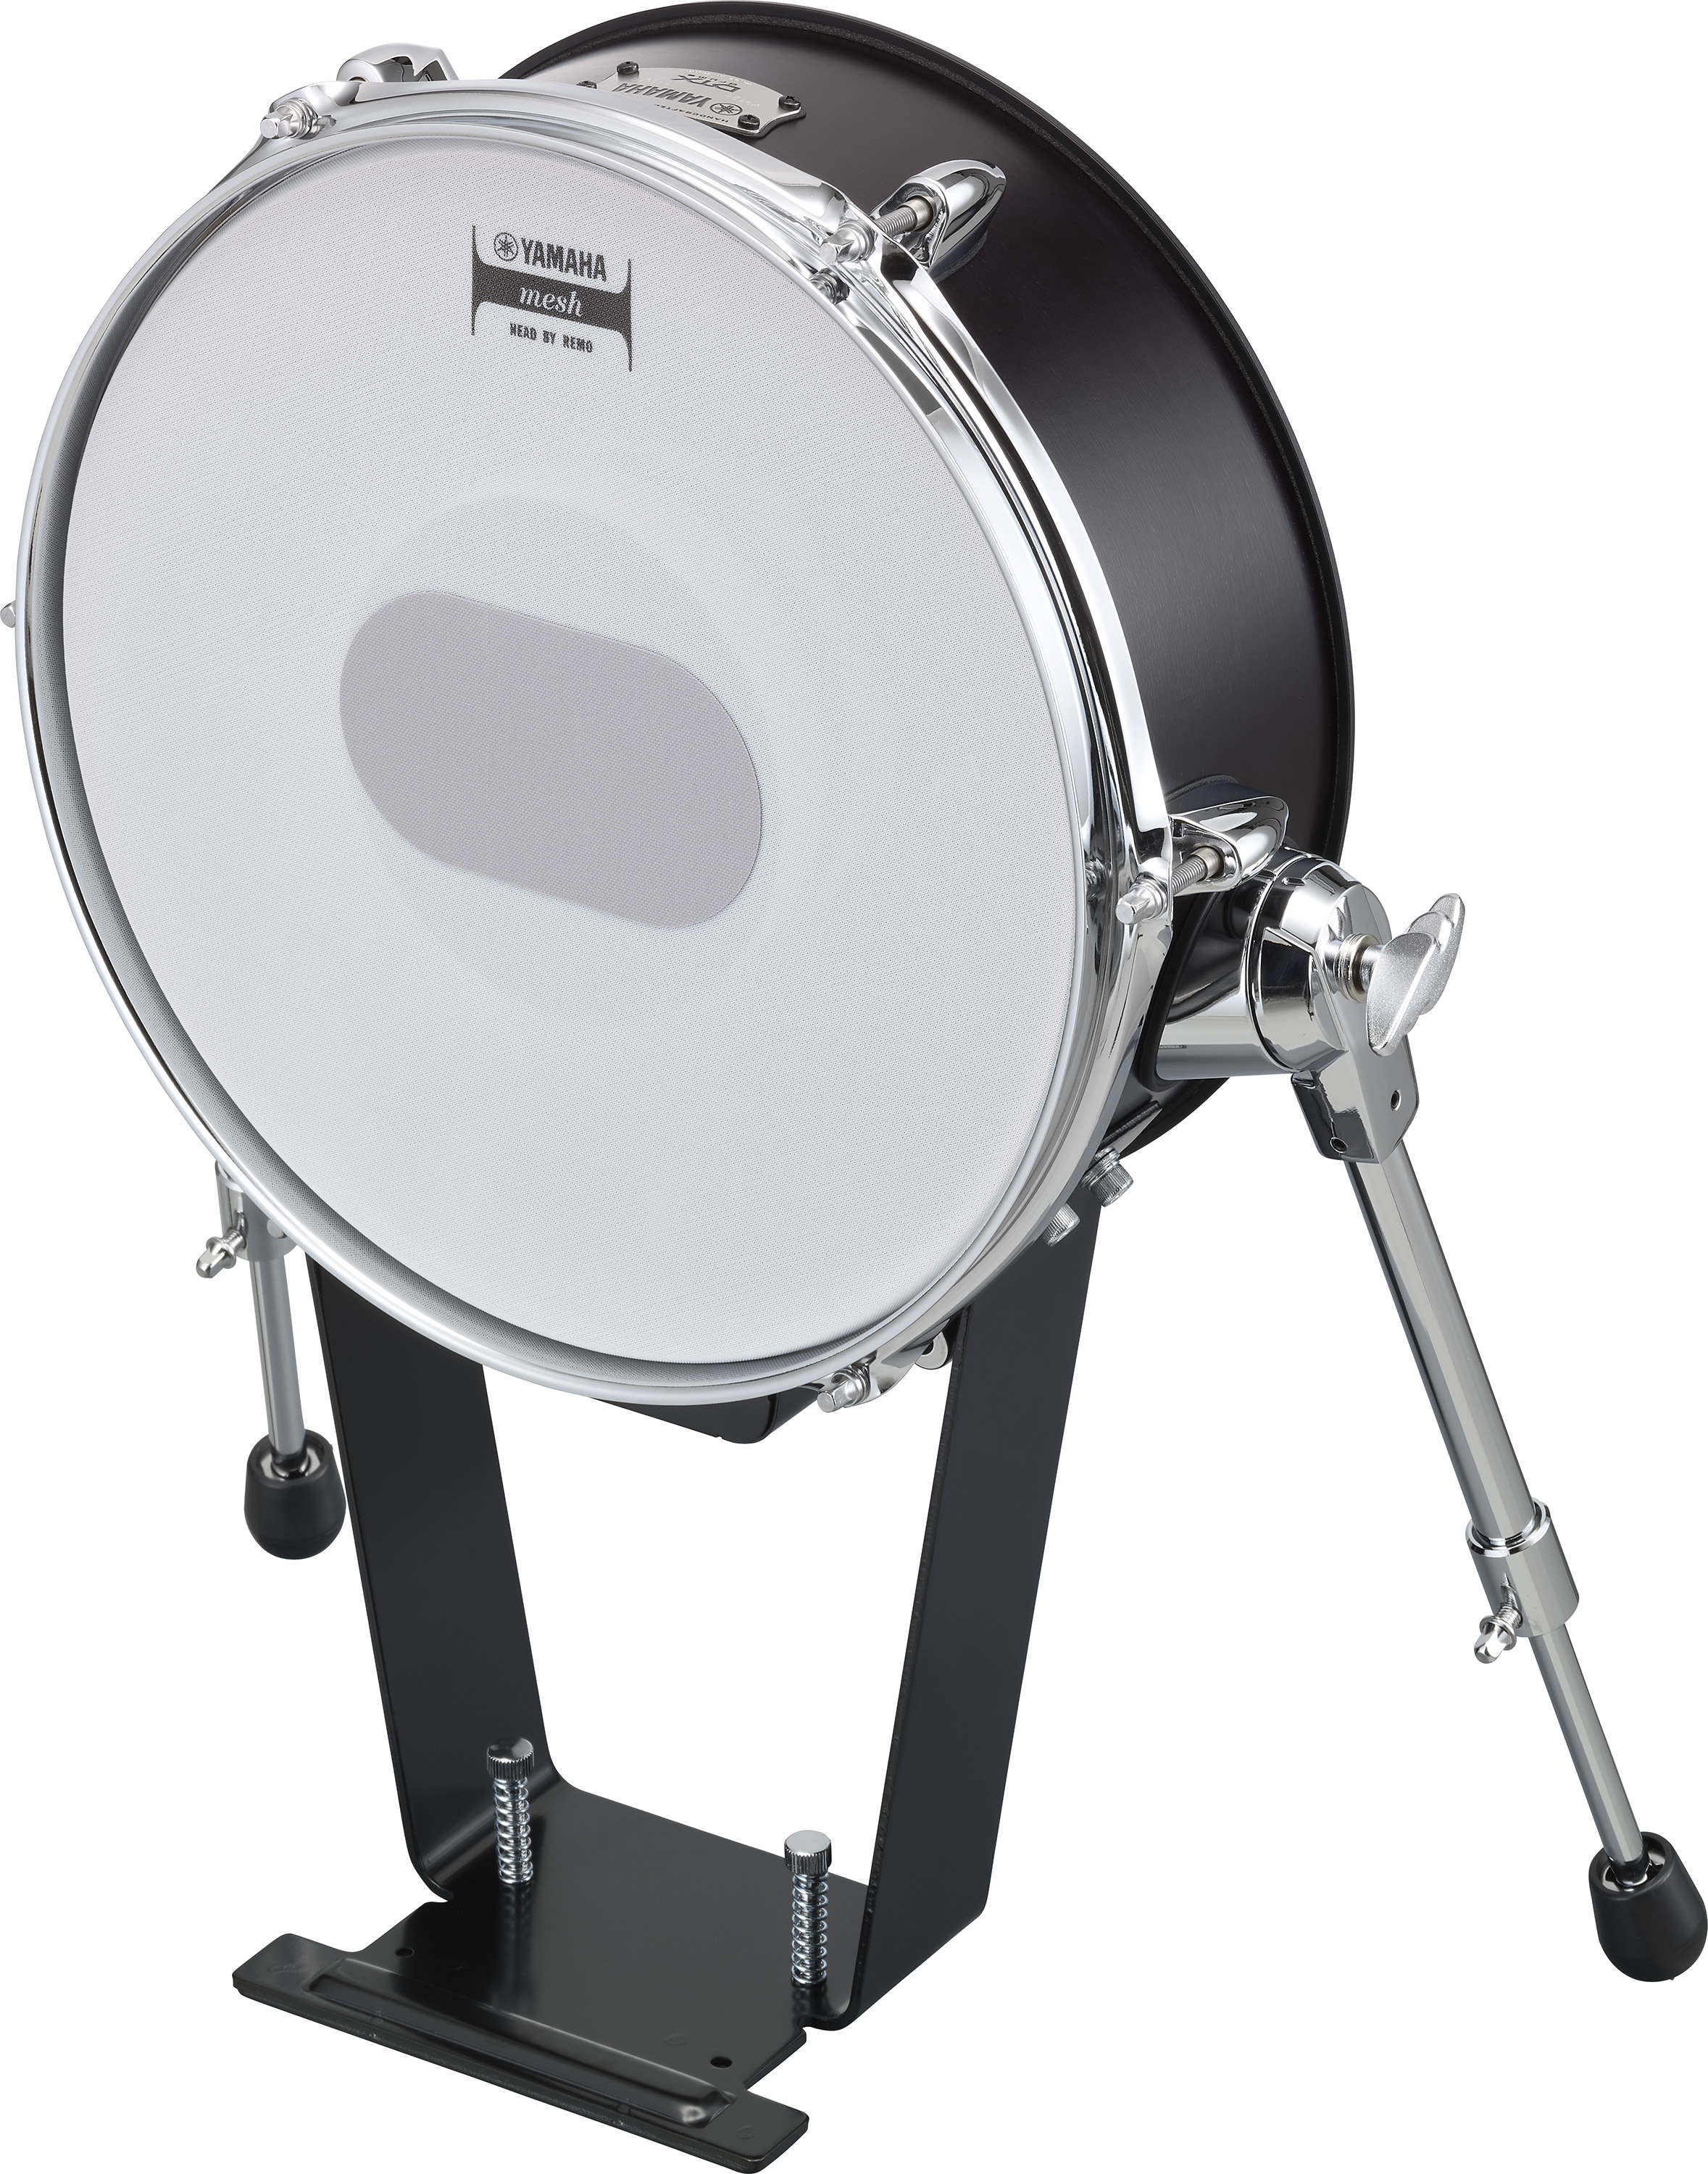 Yamaha Dtx10-kx Electronic Drum Kit Black Forrest - Electronic drum kit & set - Variation 3